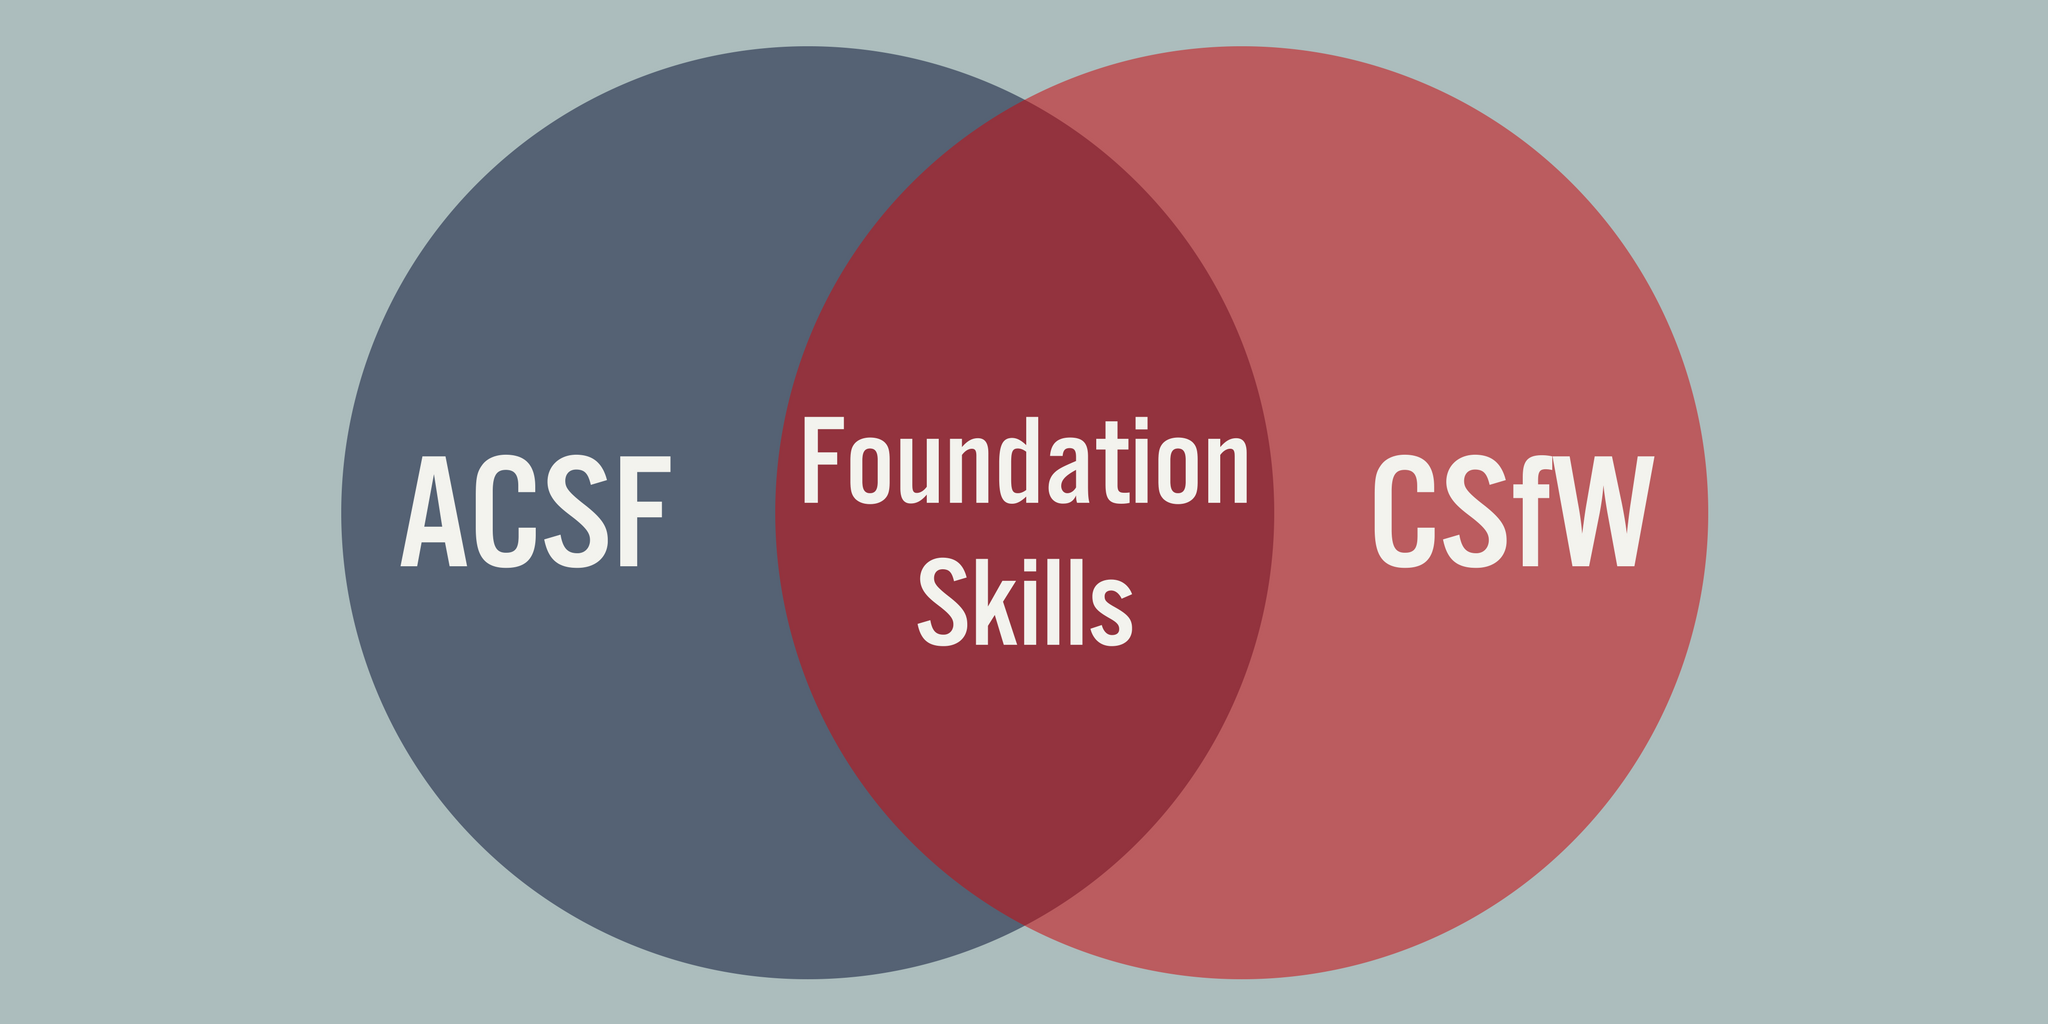 Foundation Skills - ACSF & CSfW